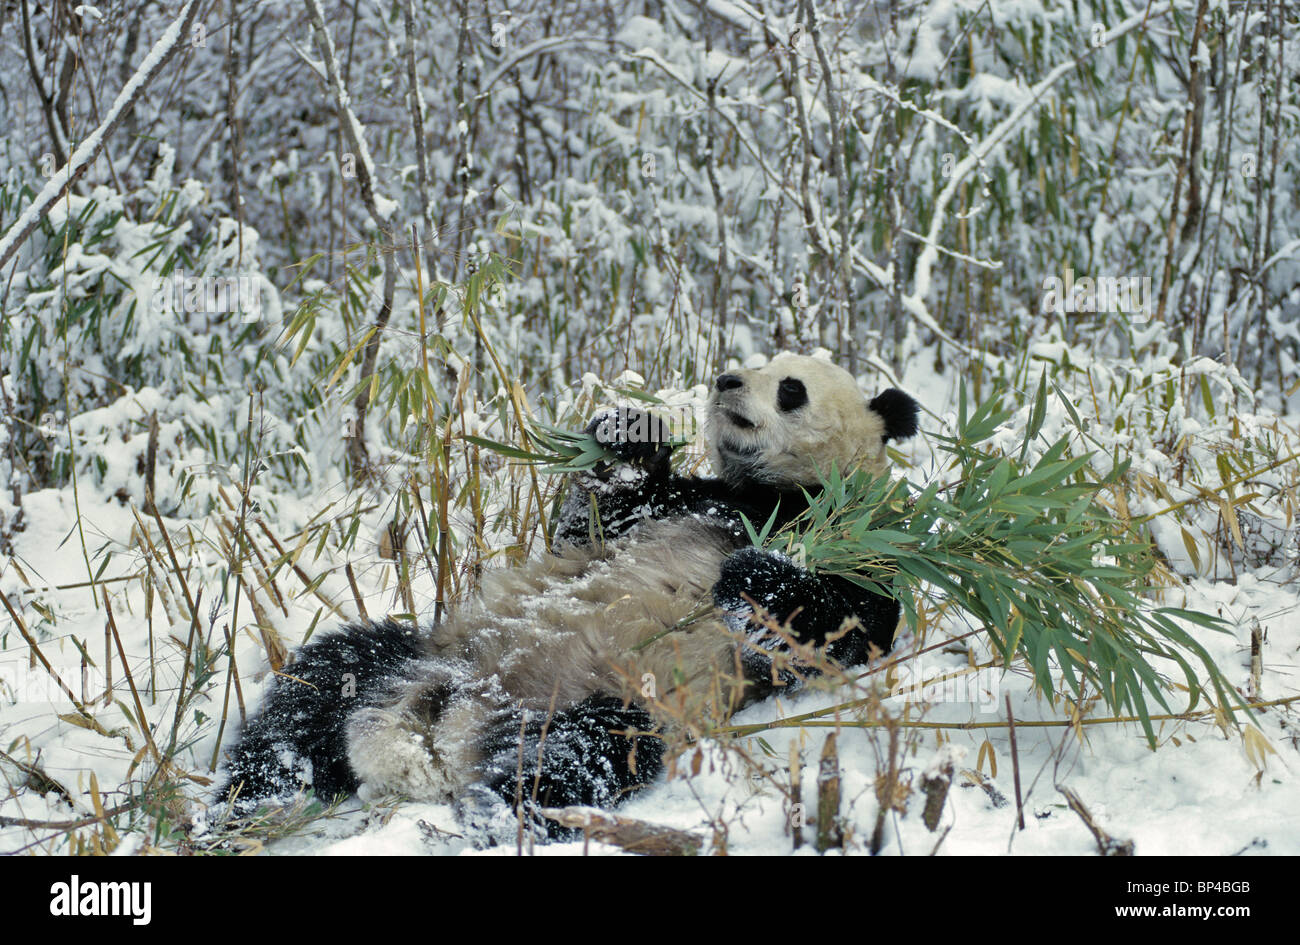 Giant panda feeding on bamboo in snow, Wolong, China, February Stock Photo